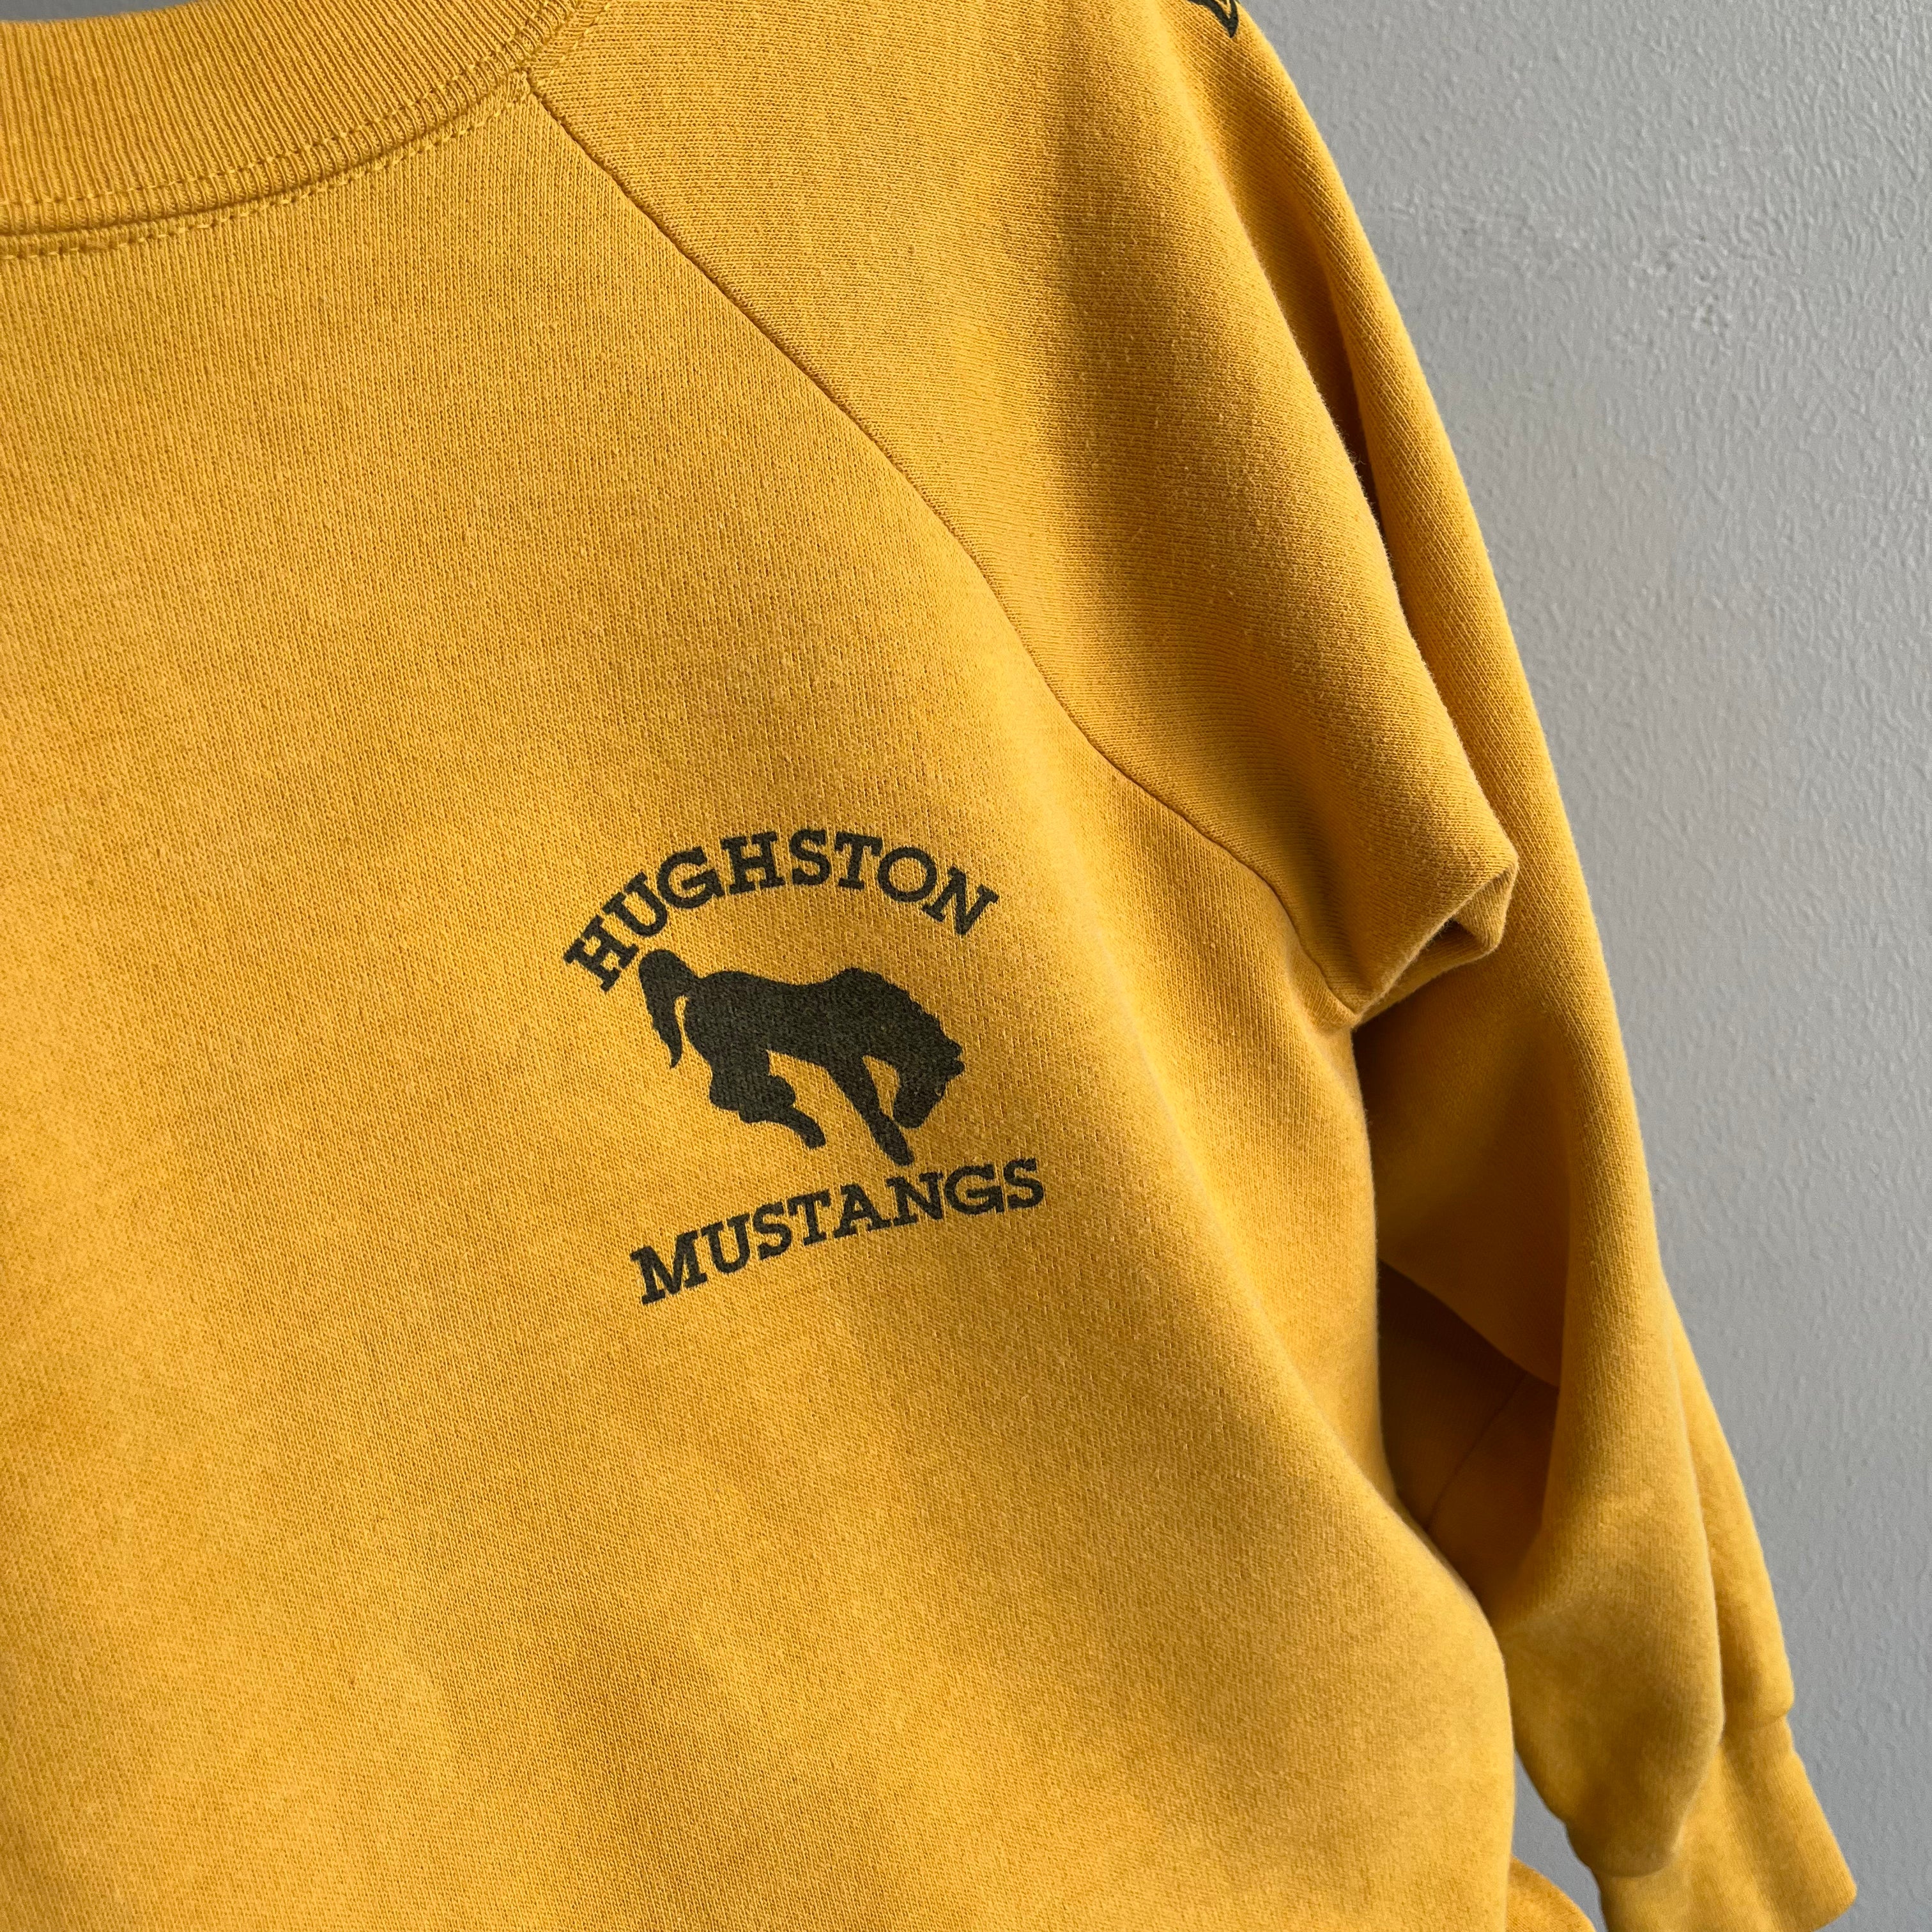 1970s Hughston Mustangs - Plano, TX - Sweatshirt by Signal !!!